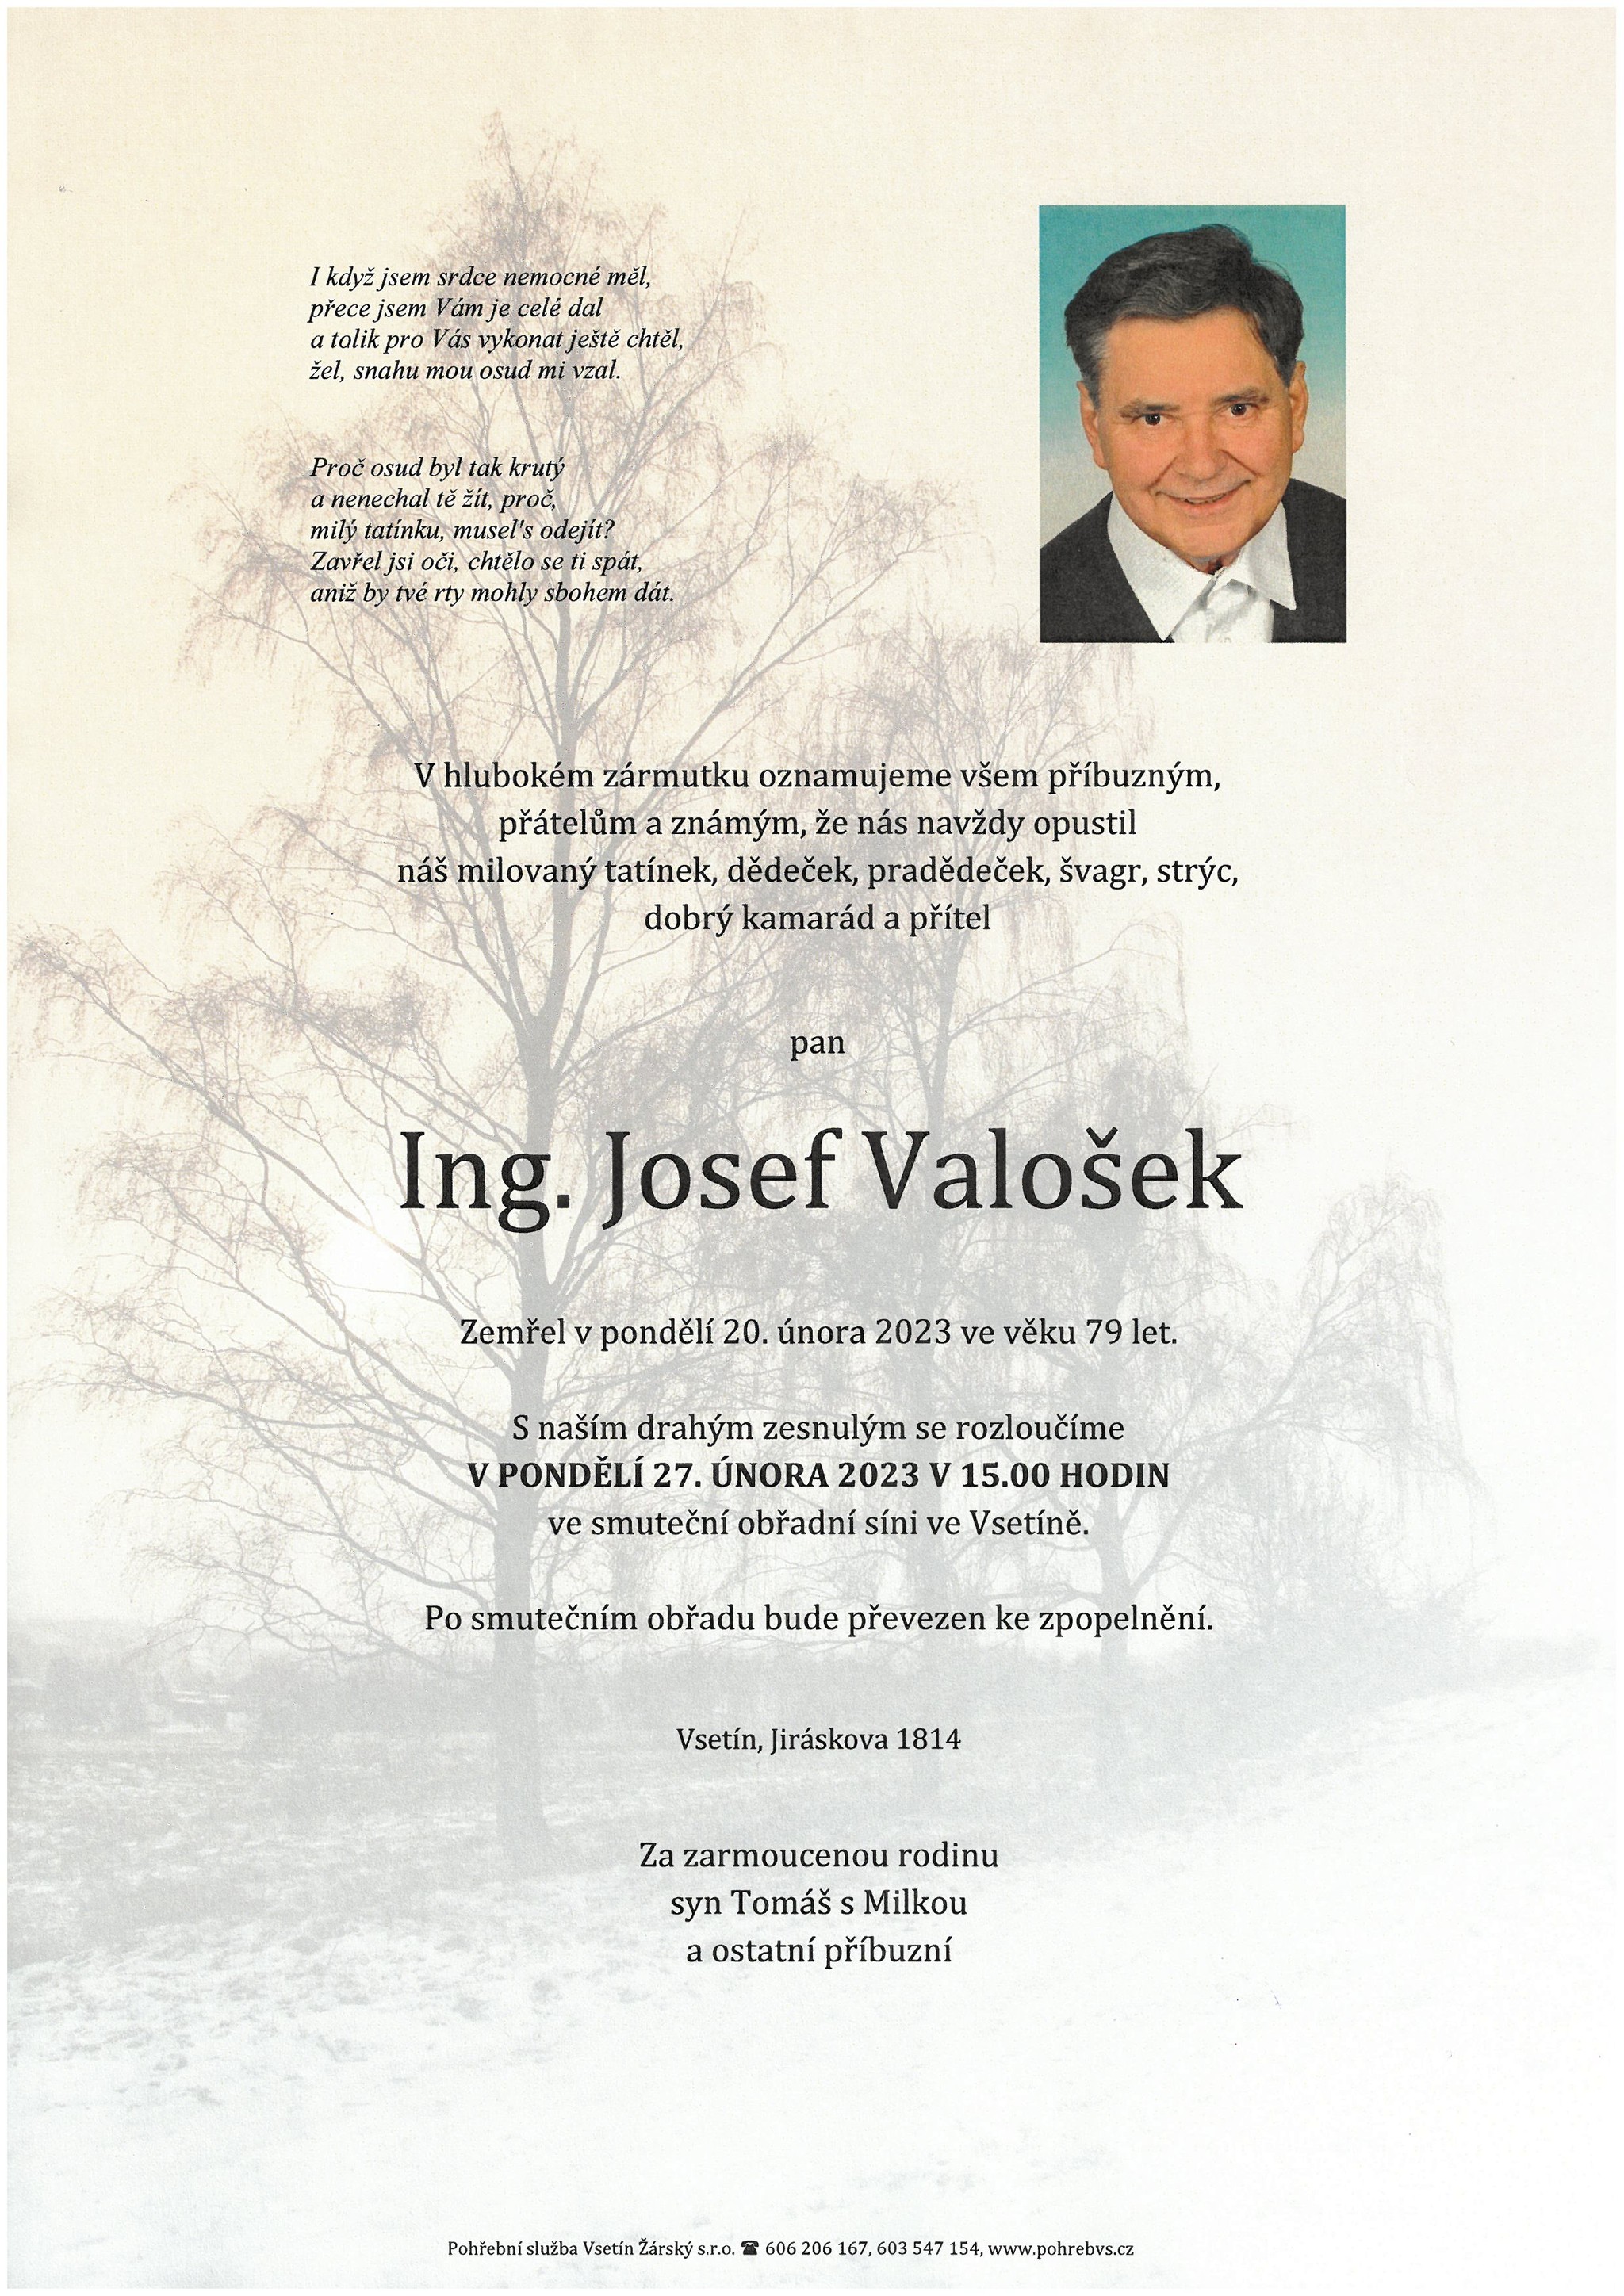 Ing. Josef Valošek